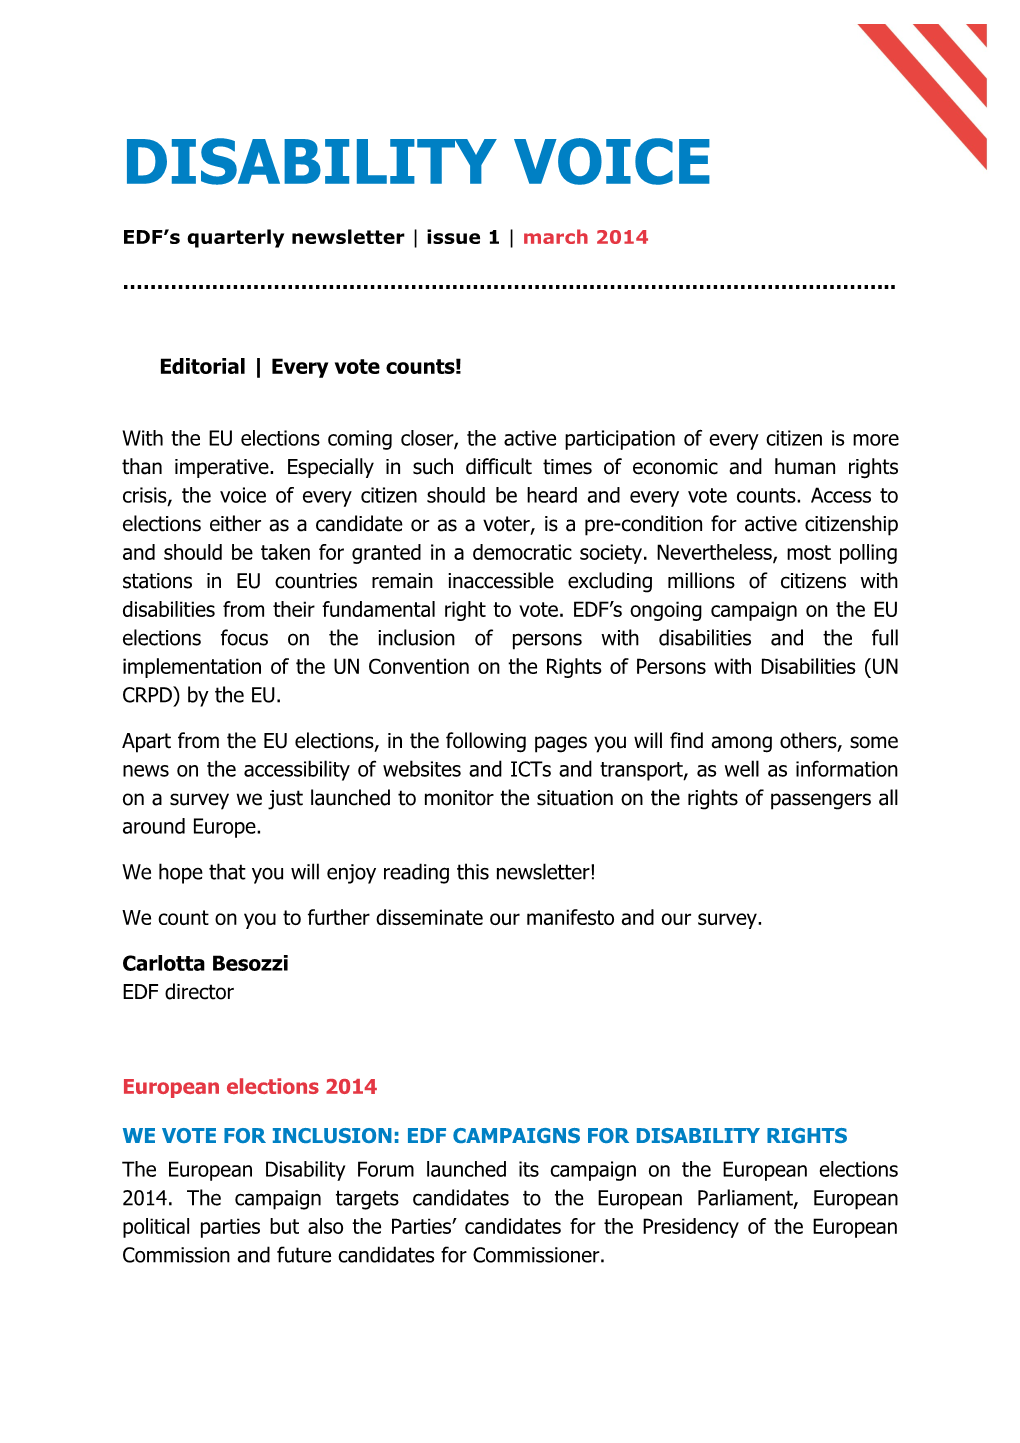 EDF S Quarterly Newsletter Issue1 March 2014